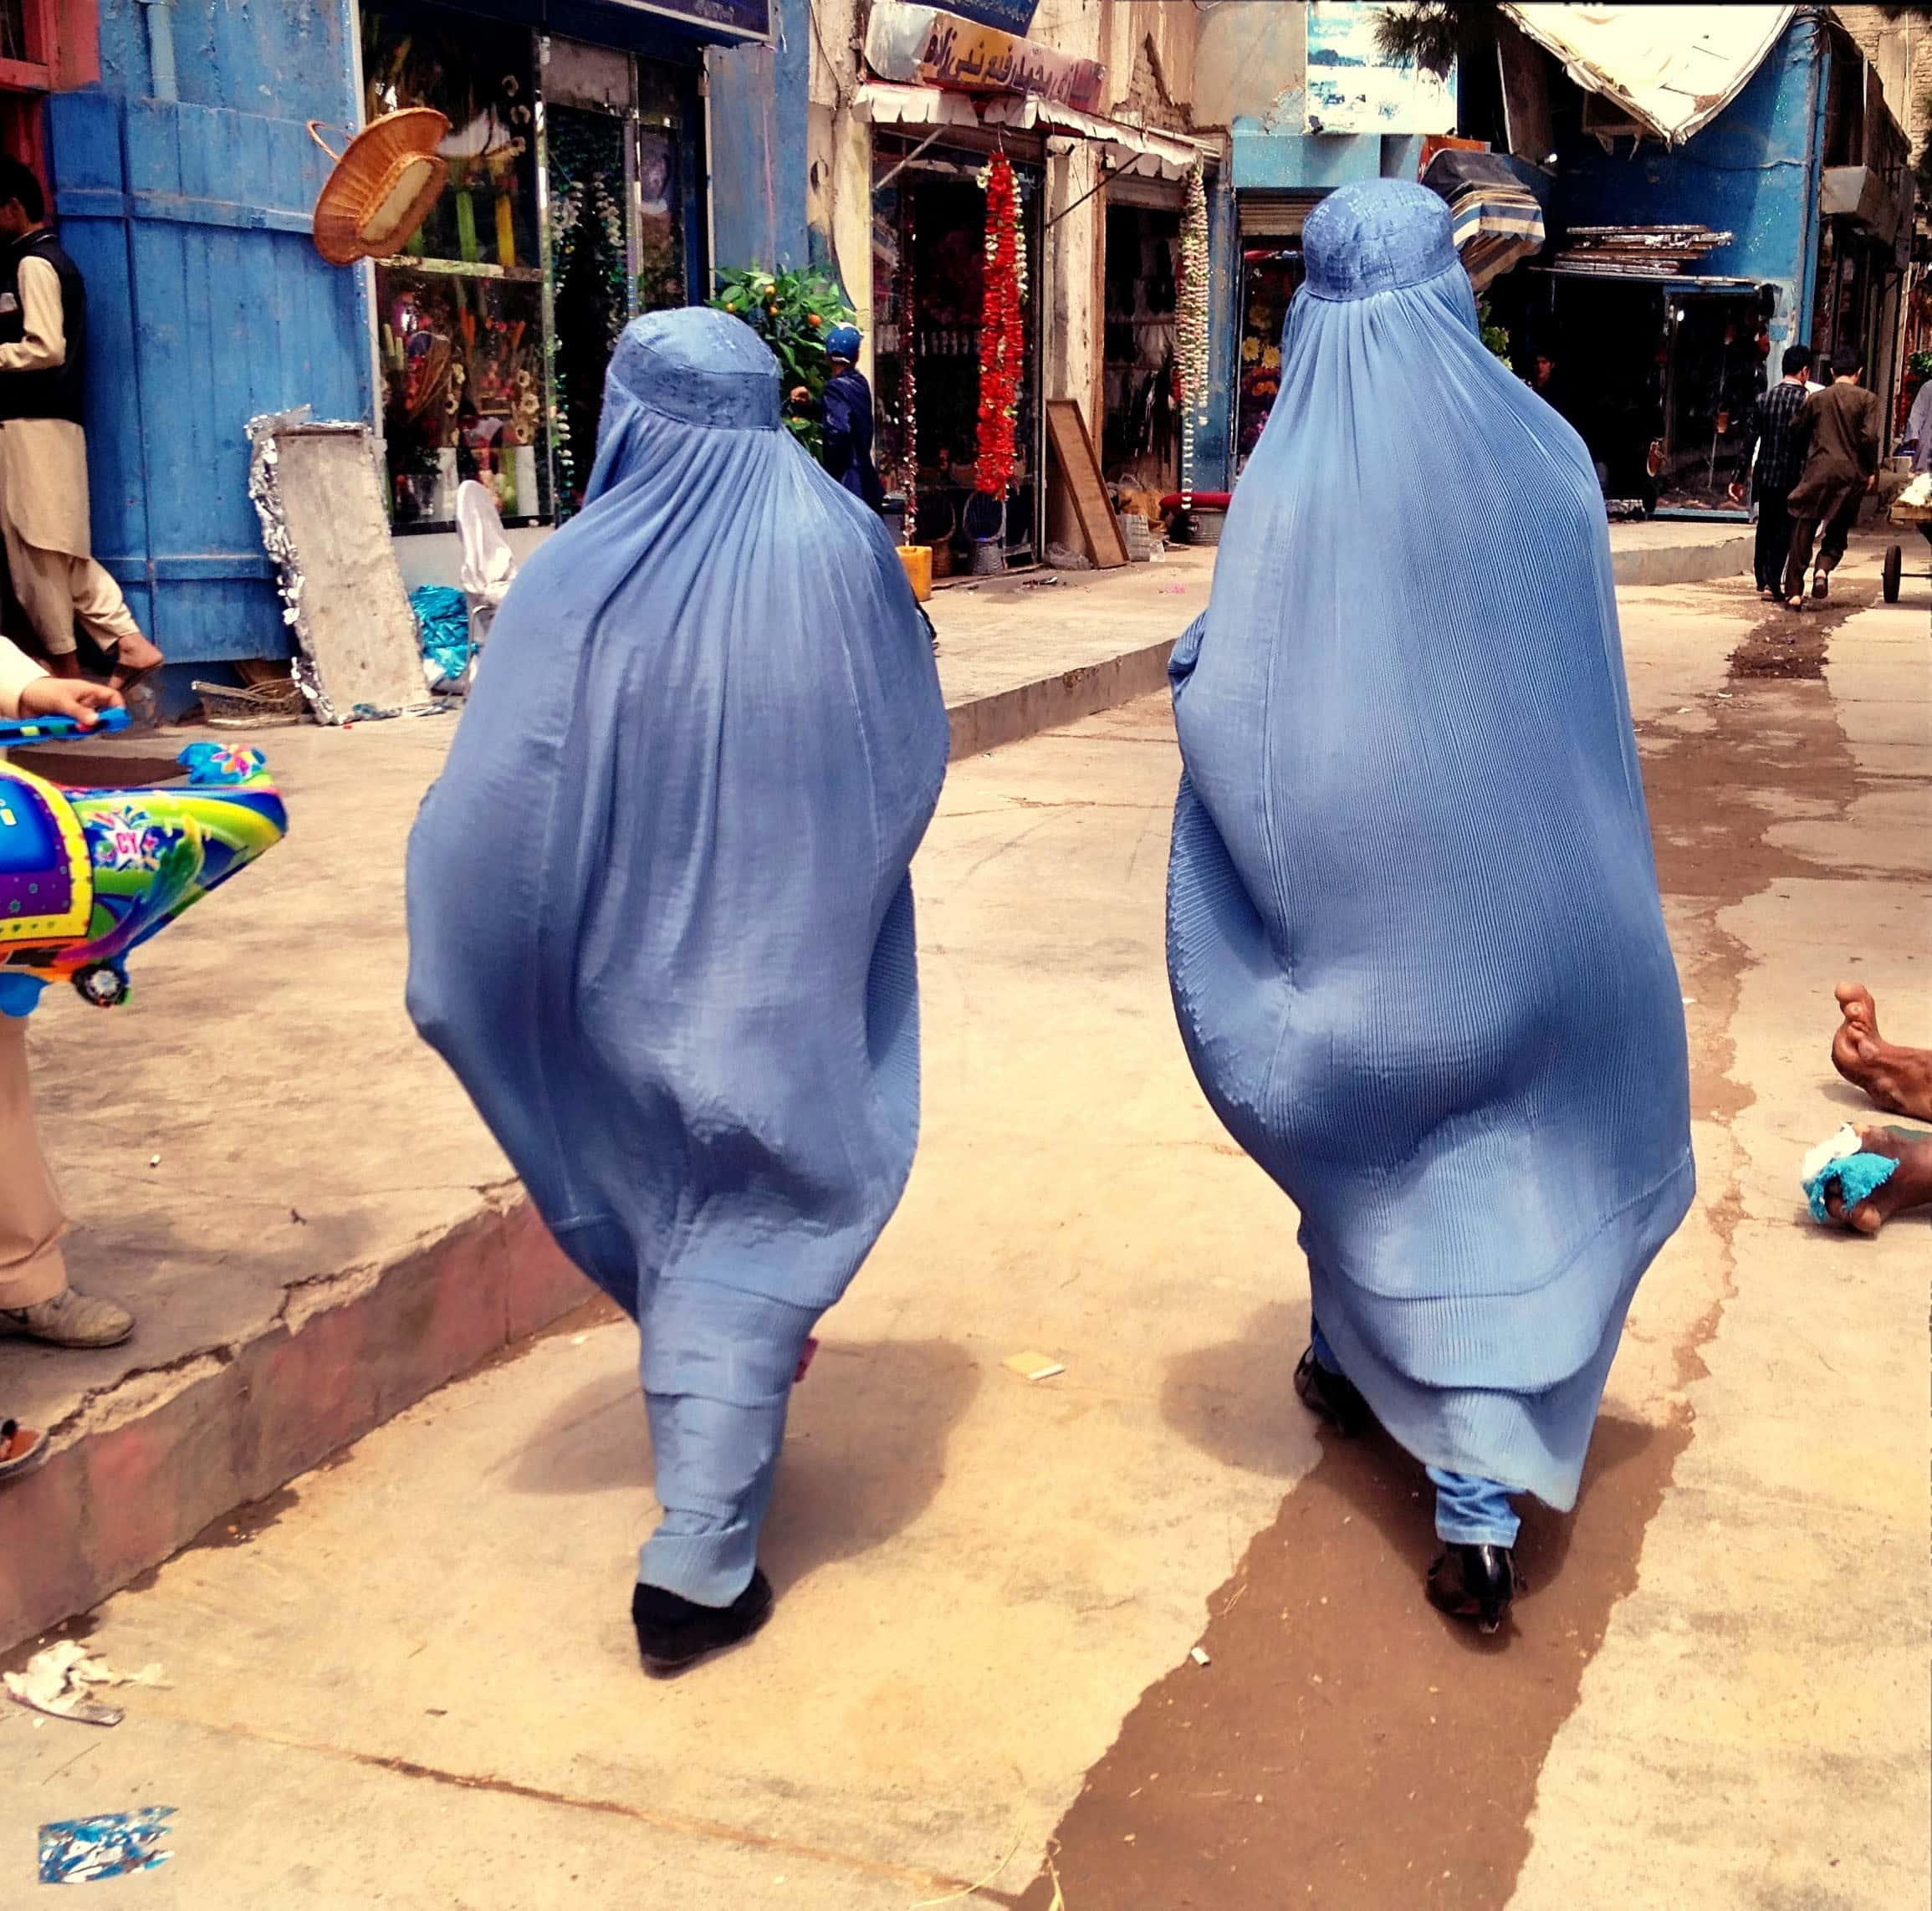 Burqa-wearing women on the streets of Kabul